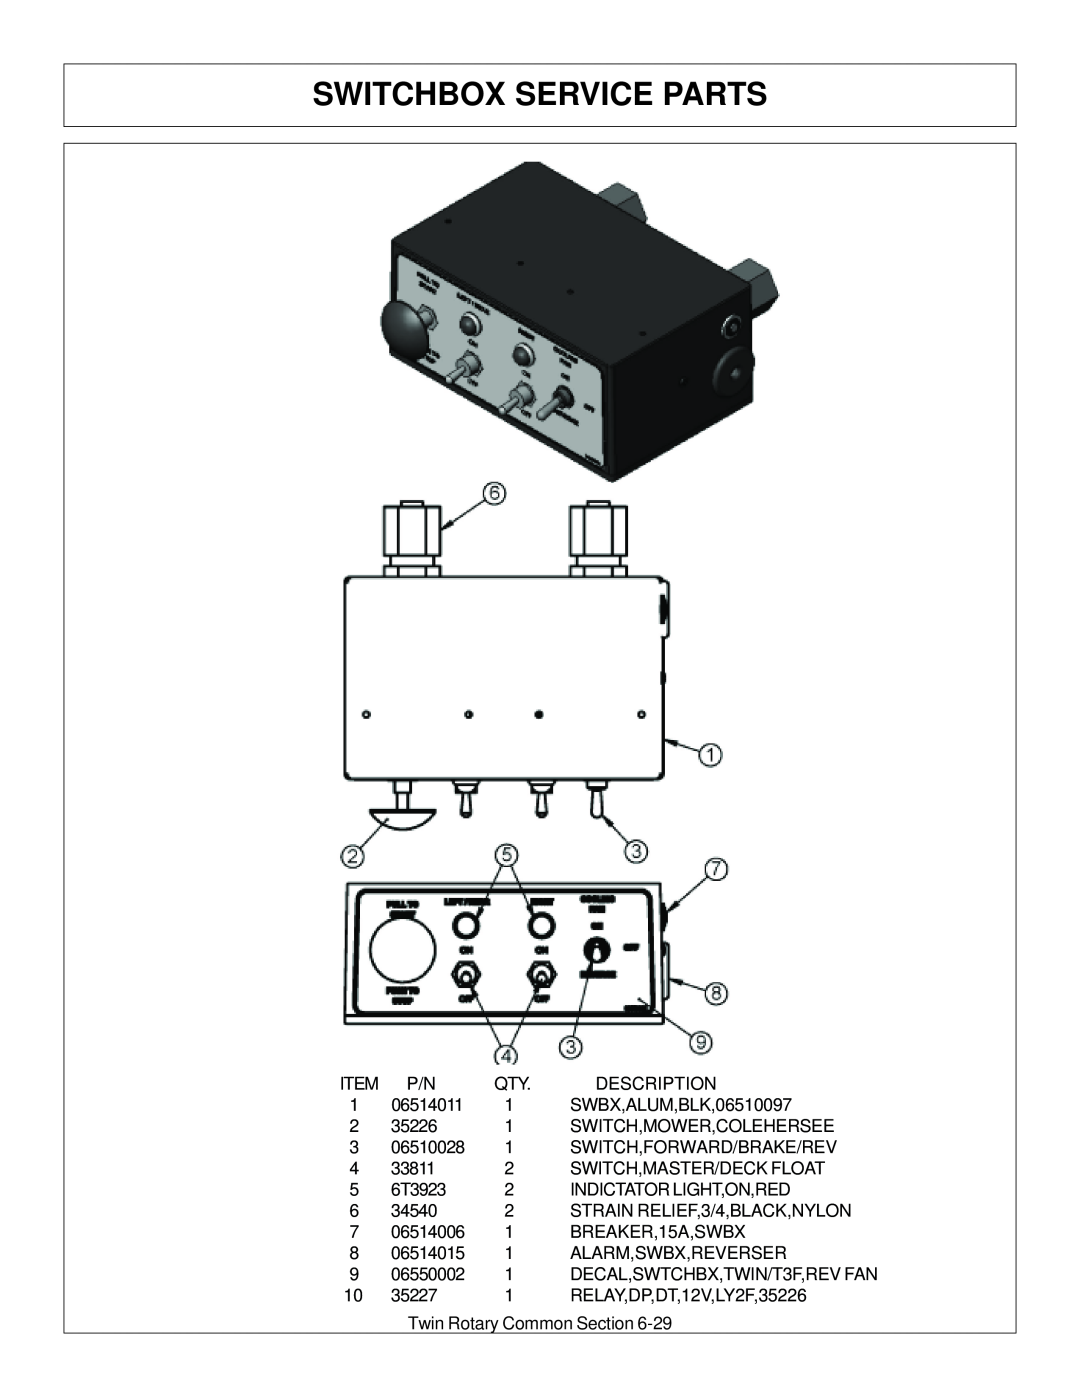 Tiger Products Co., Ltd JD 72-7520 manual Switchbox Service Parts 